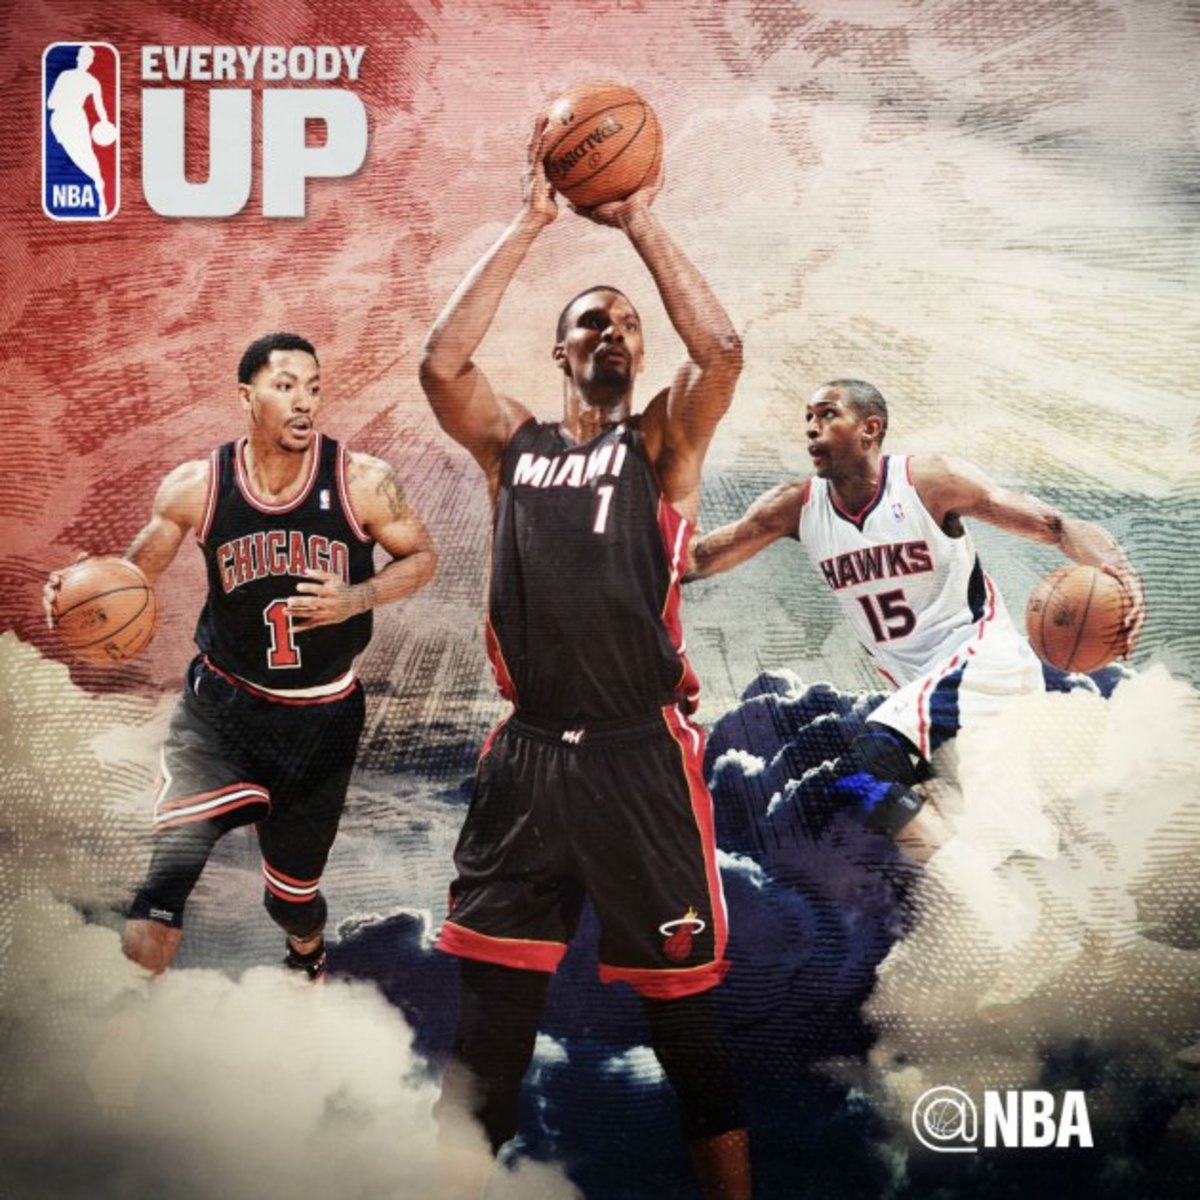 NBA-season-tip-off-Everybody-up-4.jpg